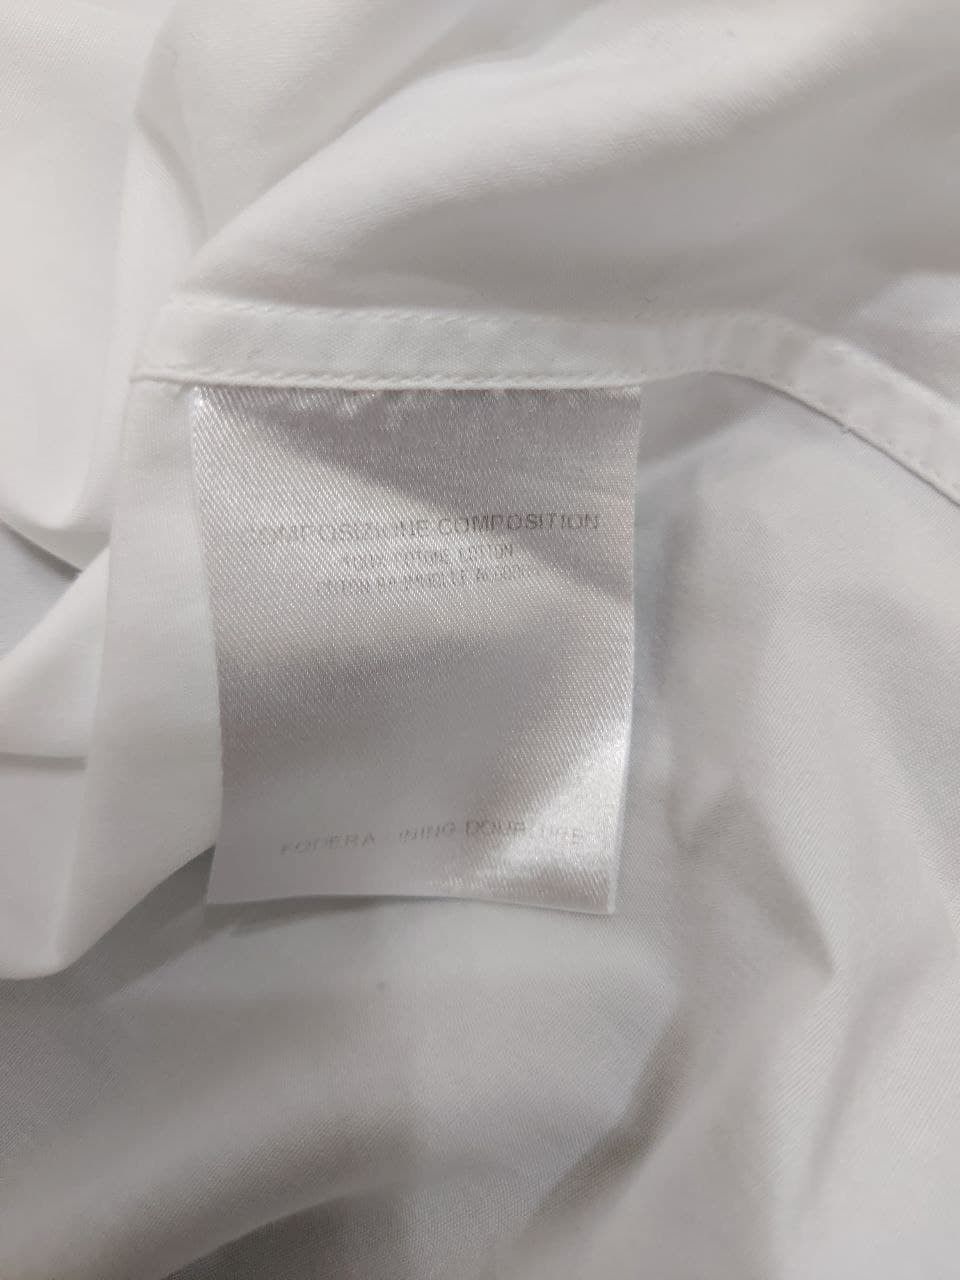 Yves Saint Laurent Shirt Size US S / EU 44-46 / 1 - 3 Thumbnail